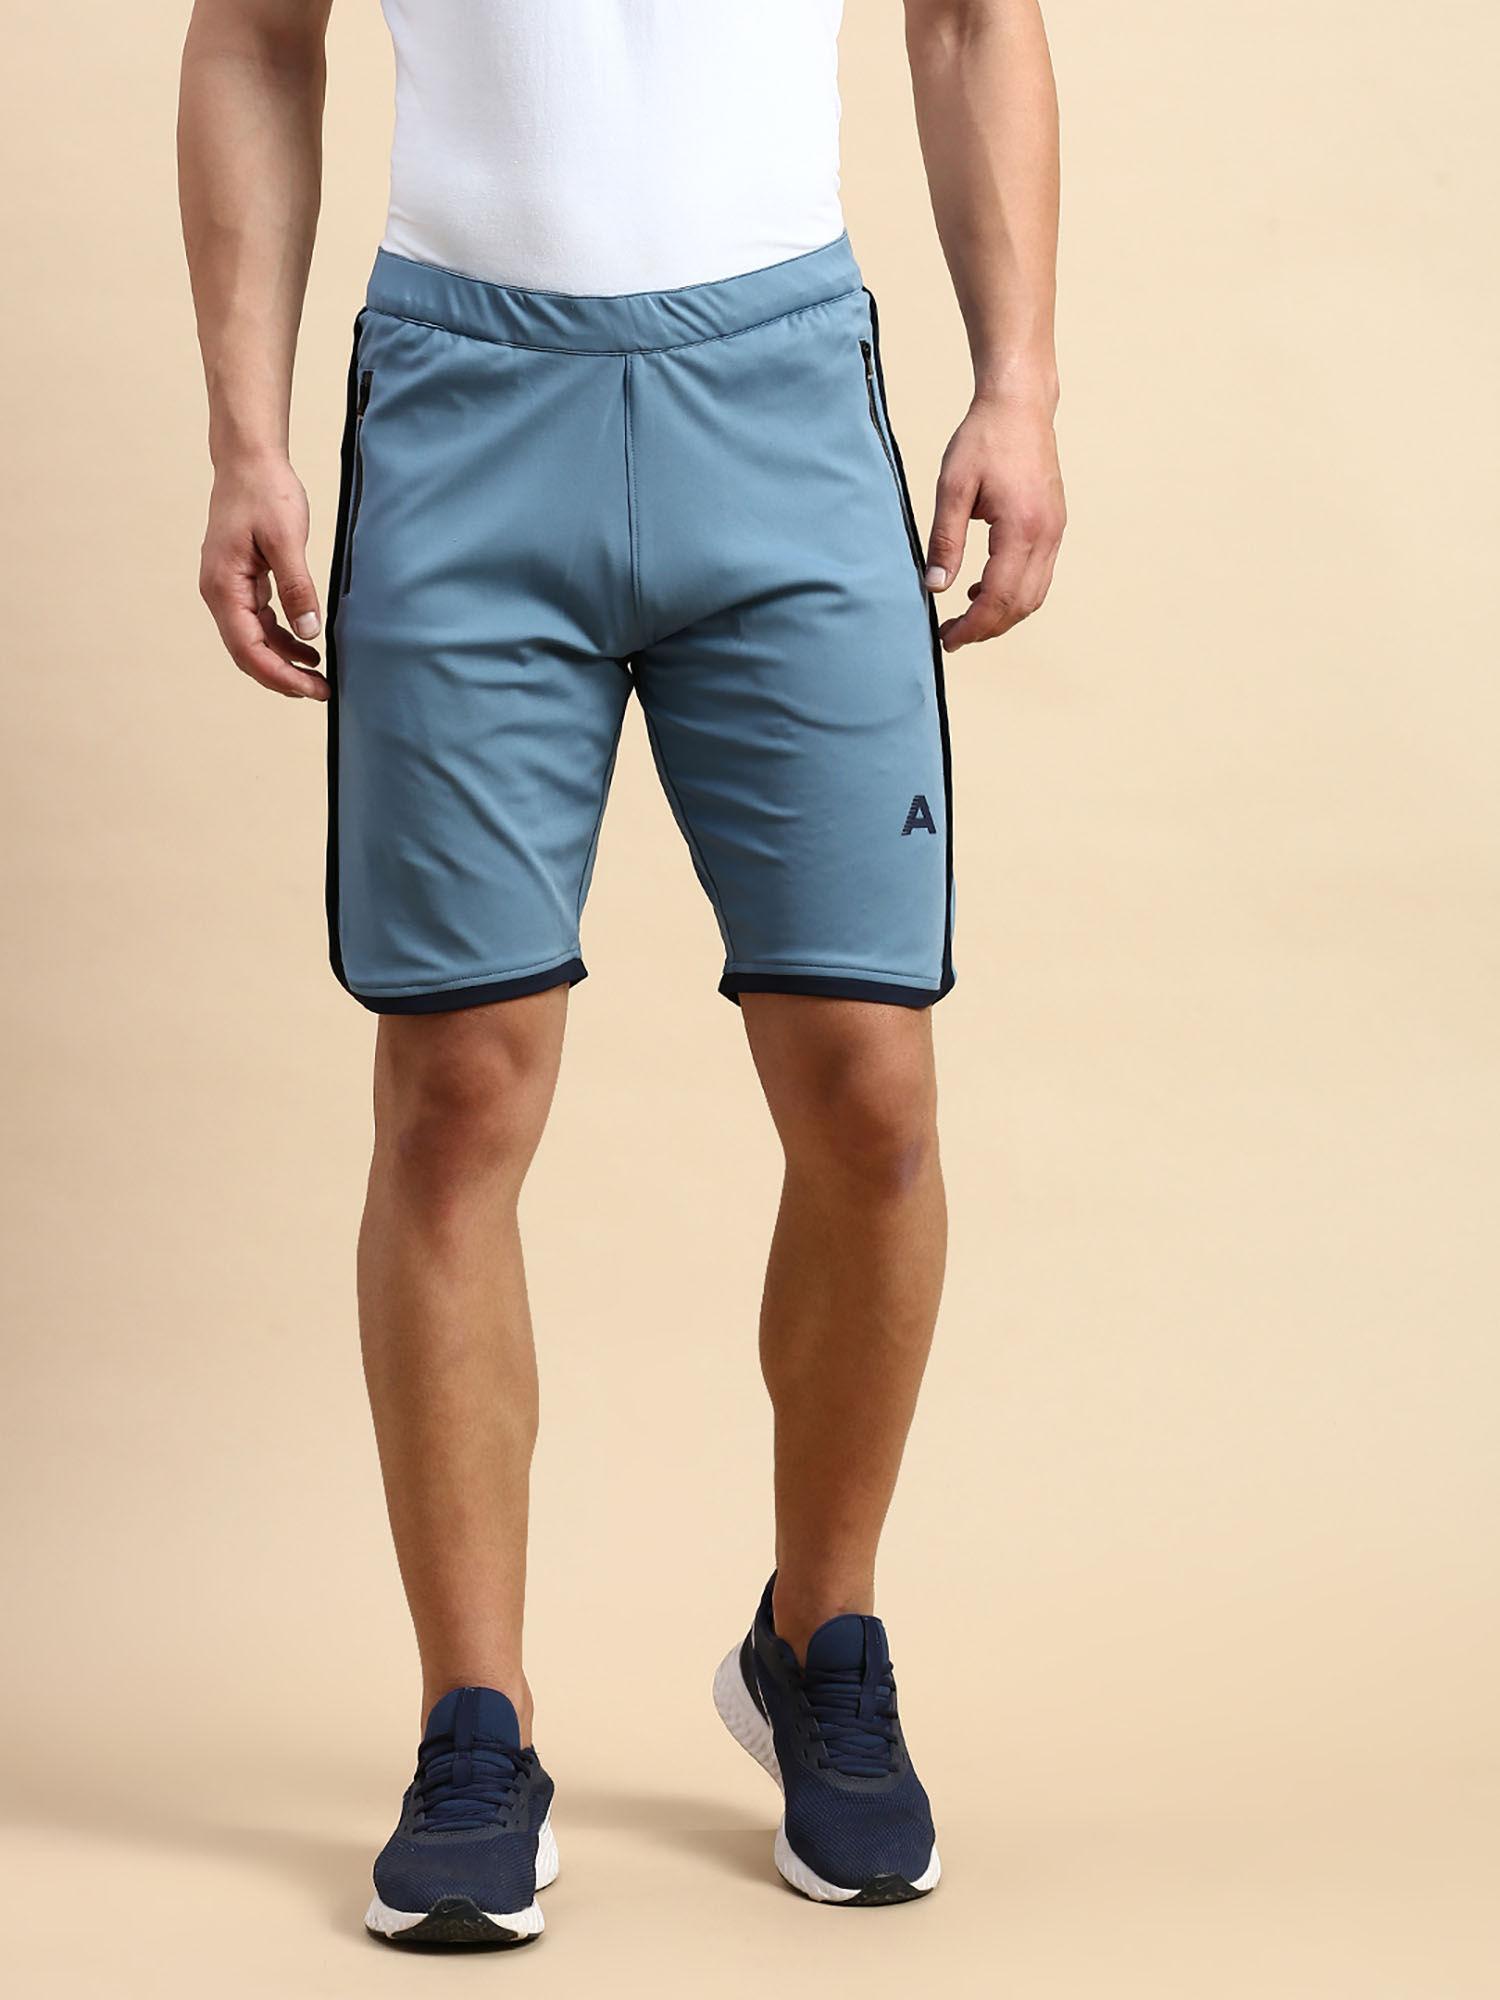 mens solid blue mid-rise regular shorts